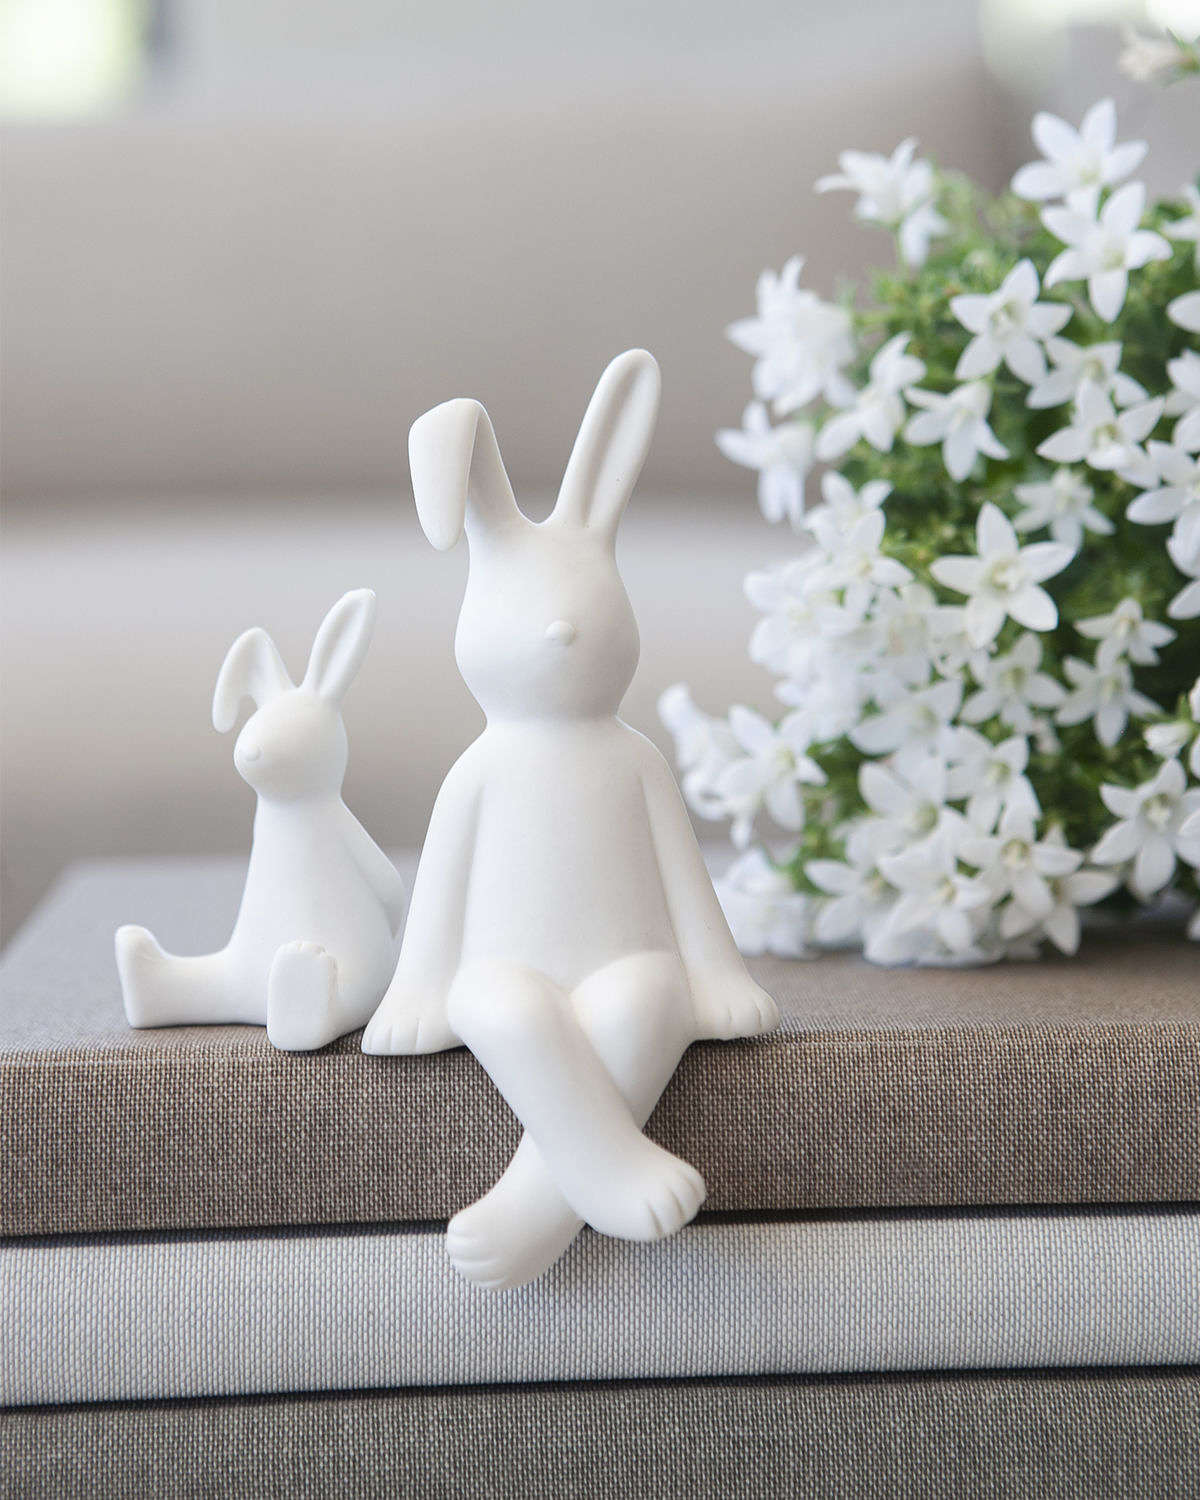 Ceramic rabbit figurine